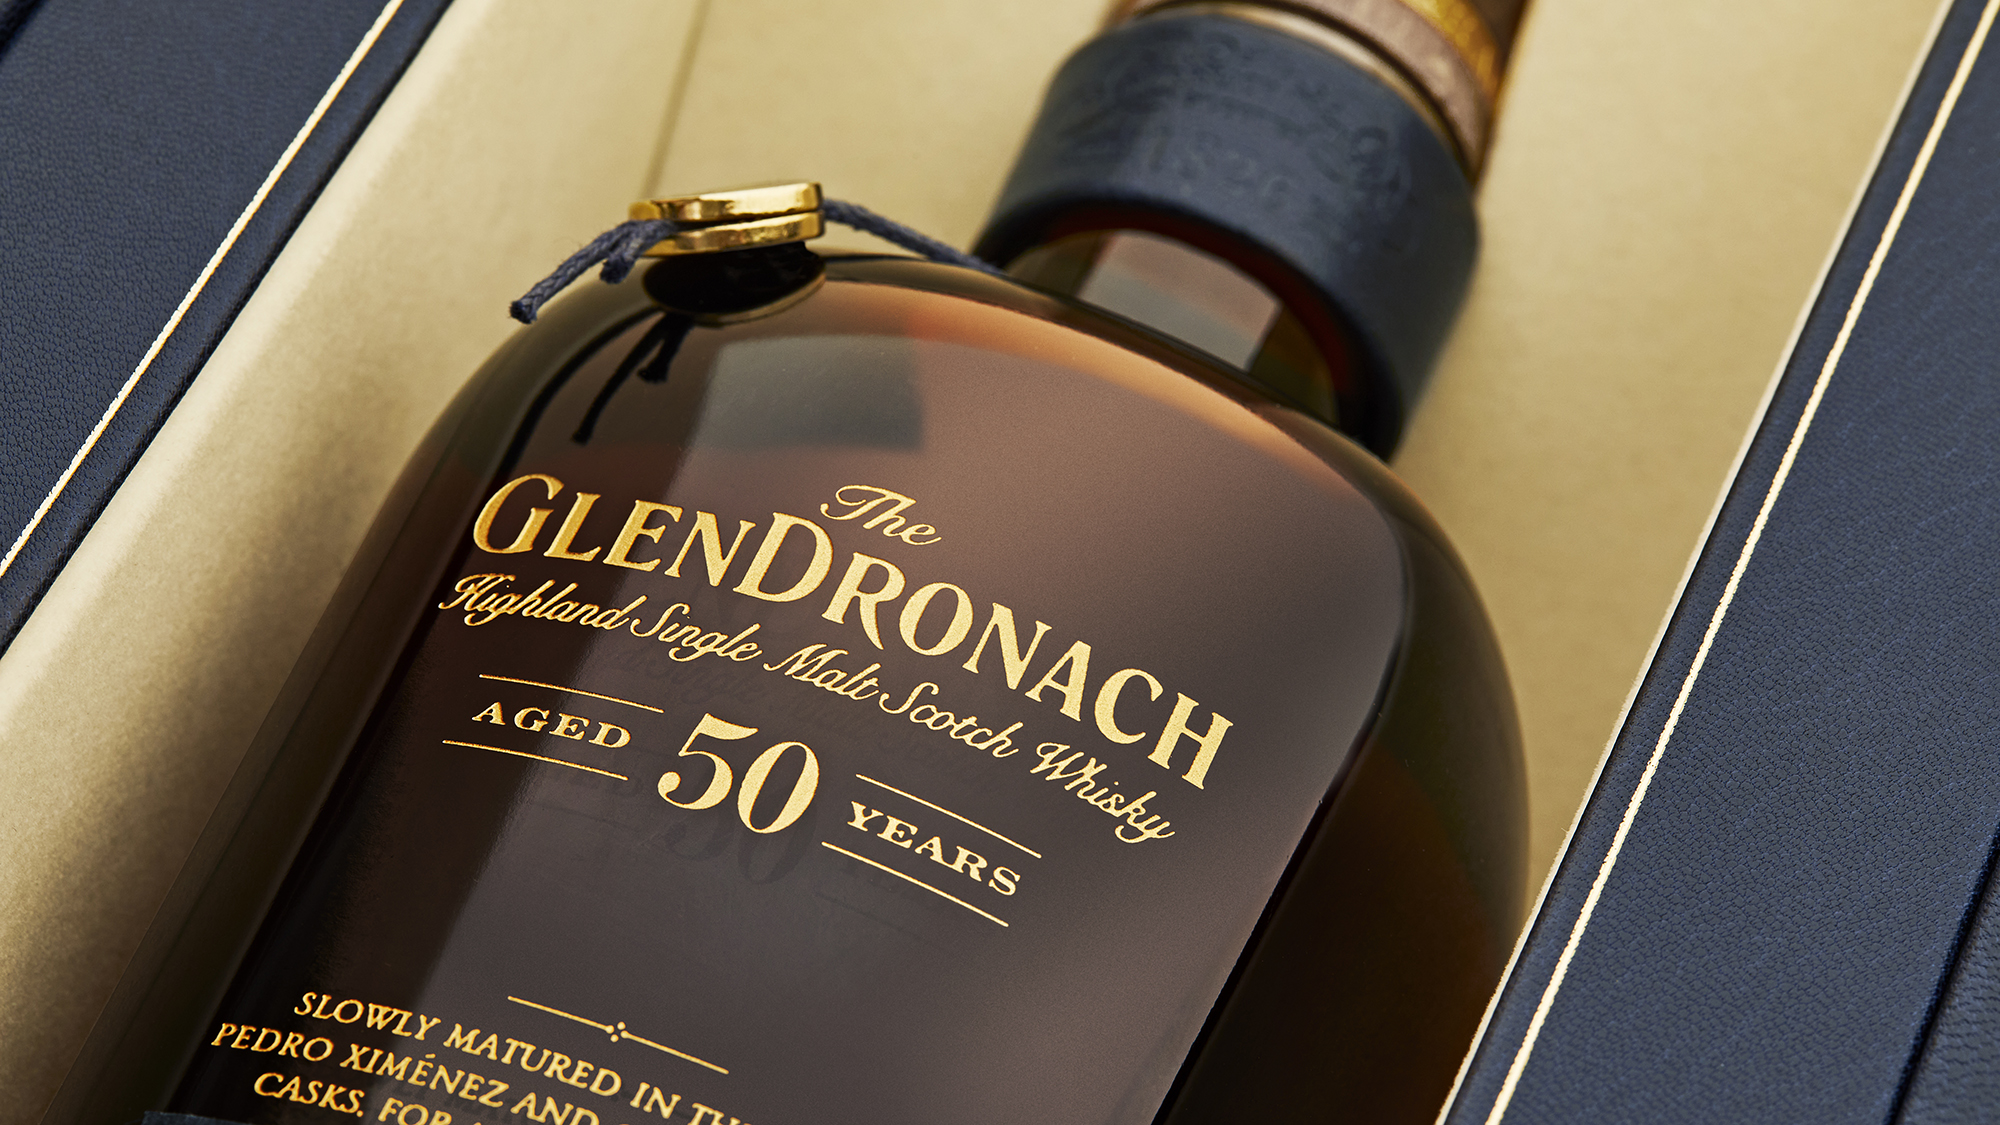 GlenDronach 50